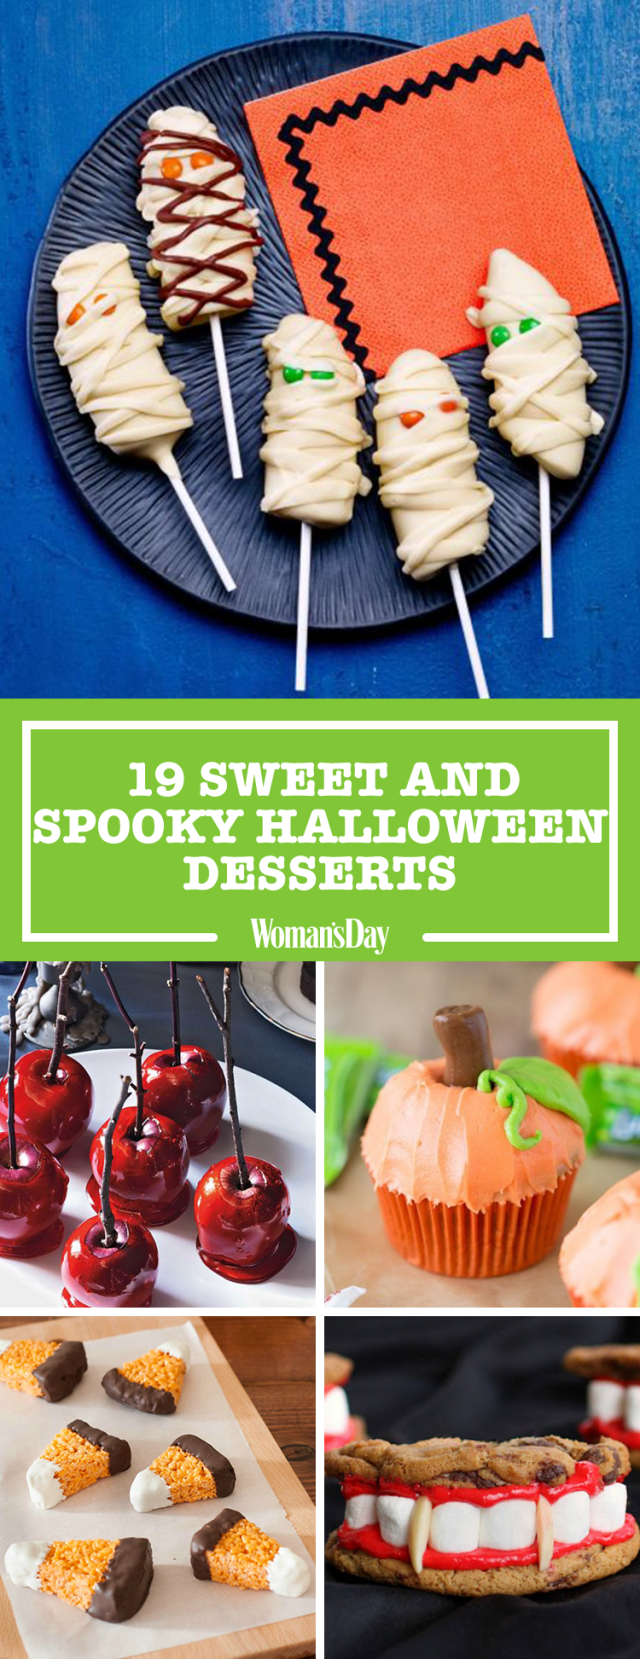 26 Easy Halloween Dessert Ideas - Best Recipes for Halloween Desserts